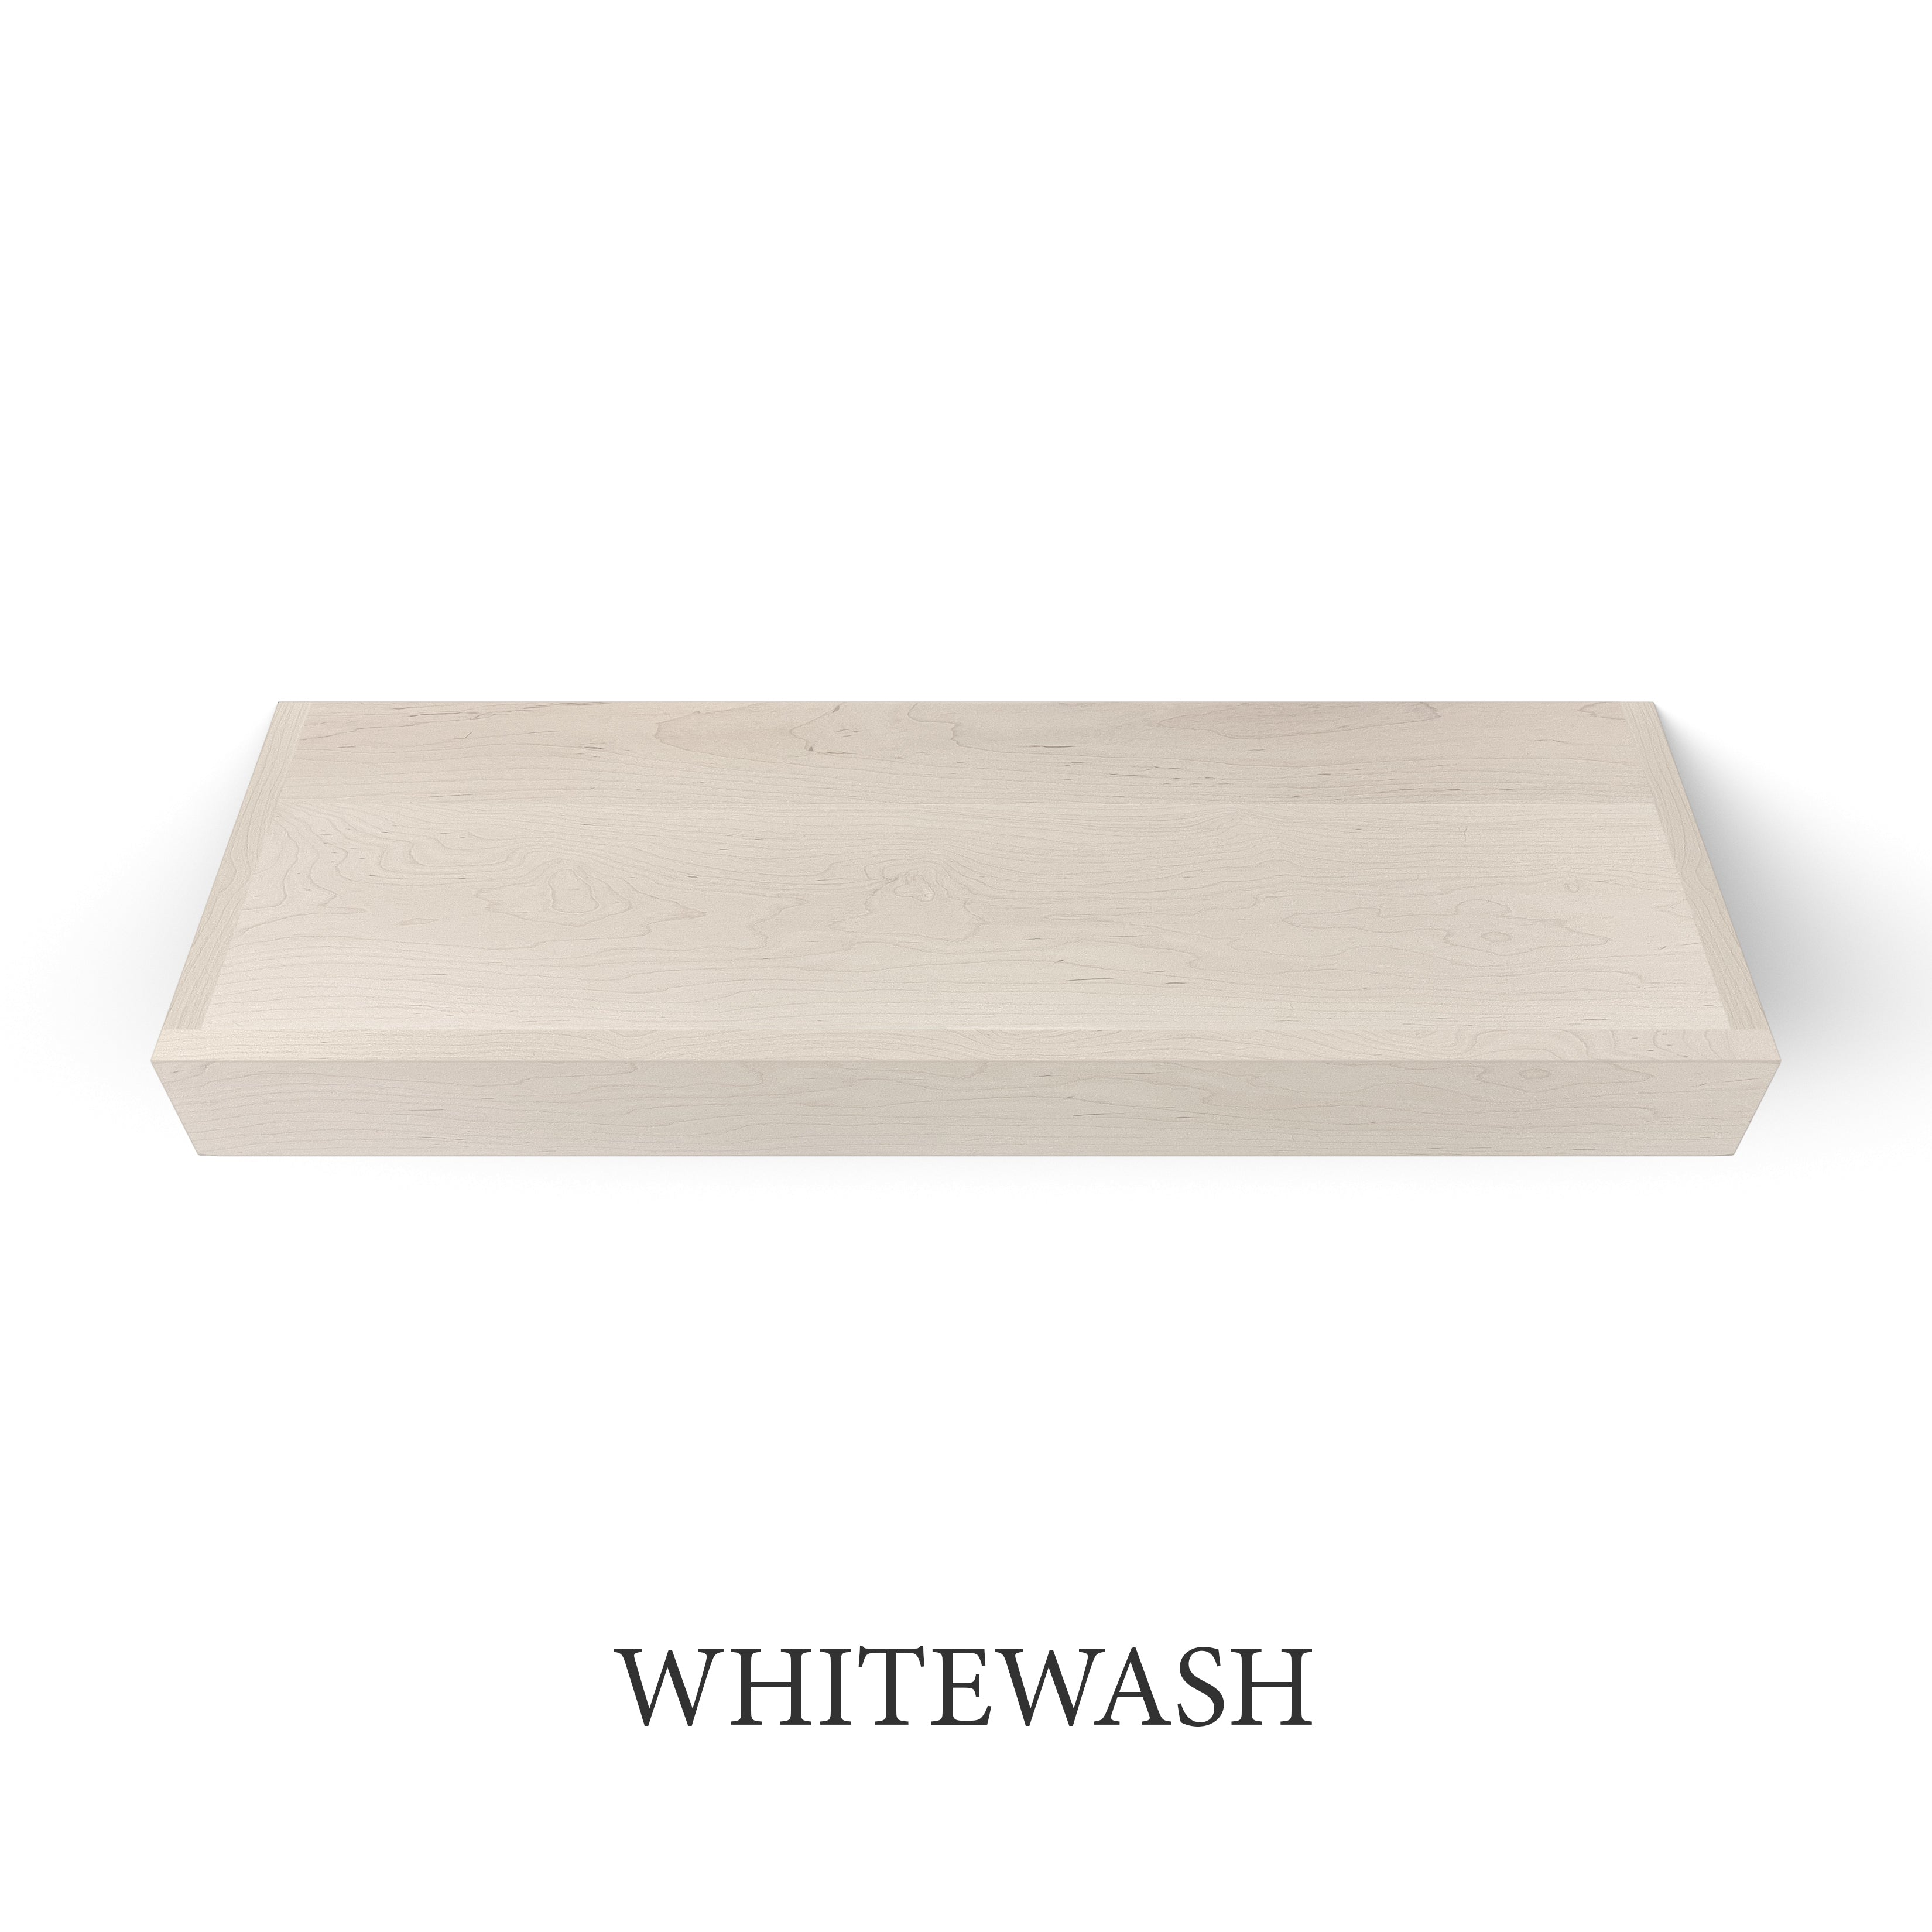 whitewash Maple 3 Inch Thick Floating Shelf